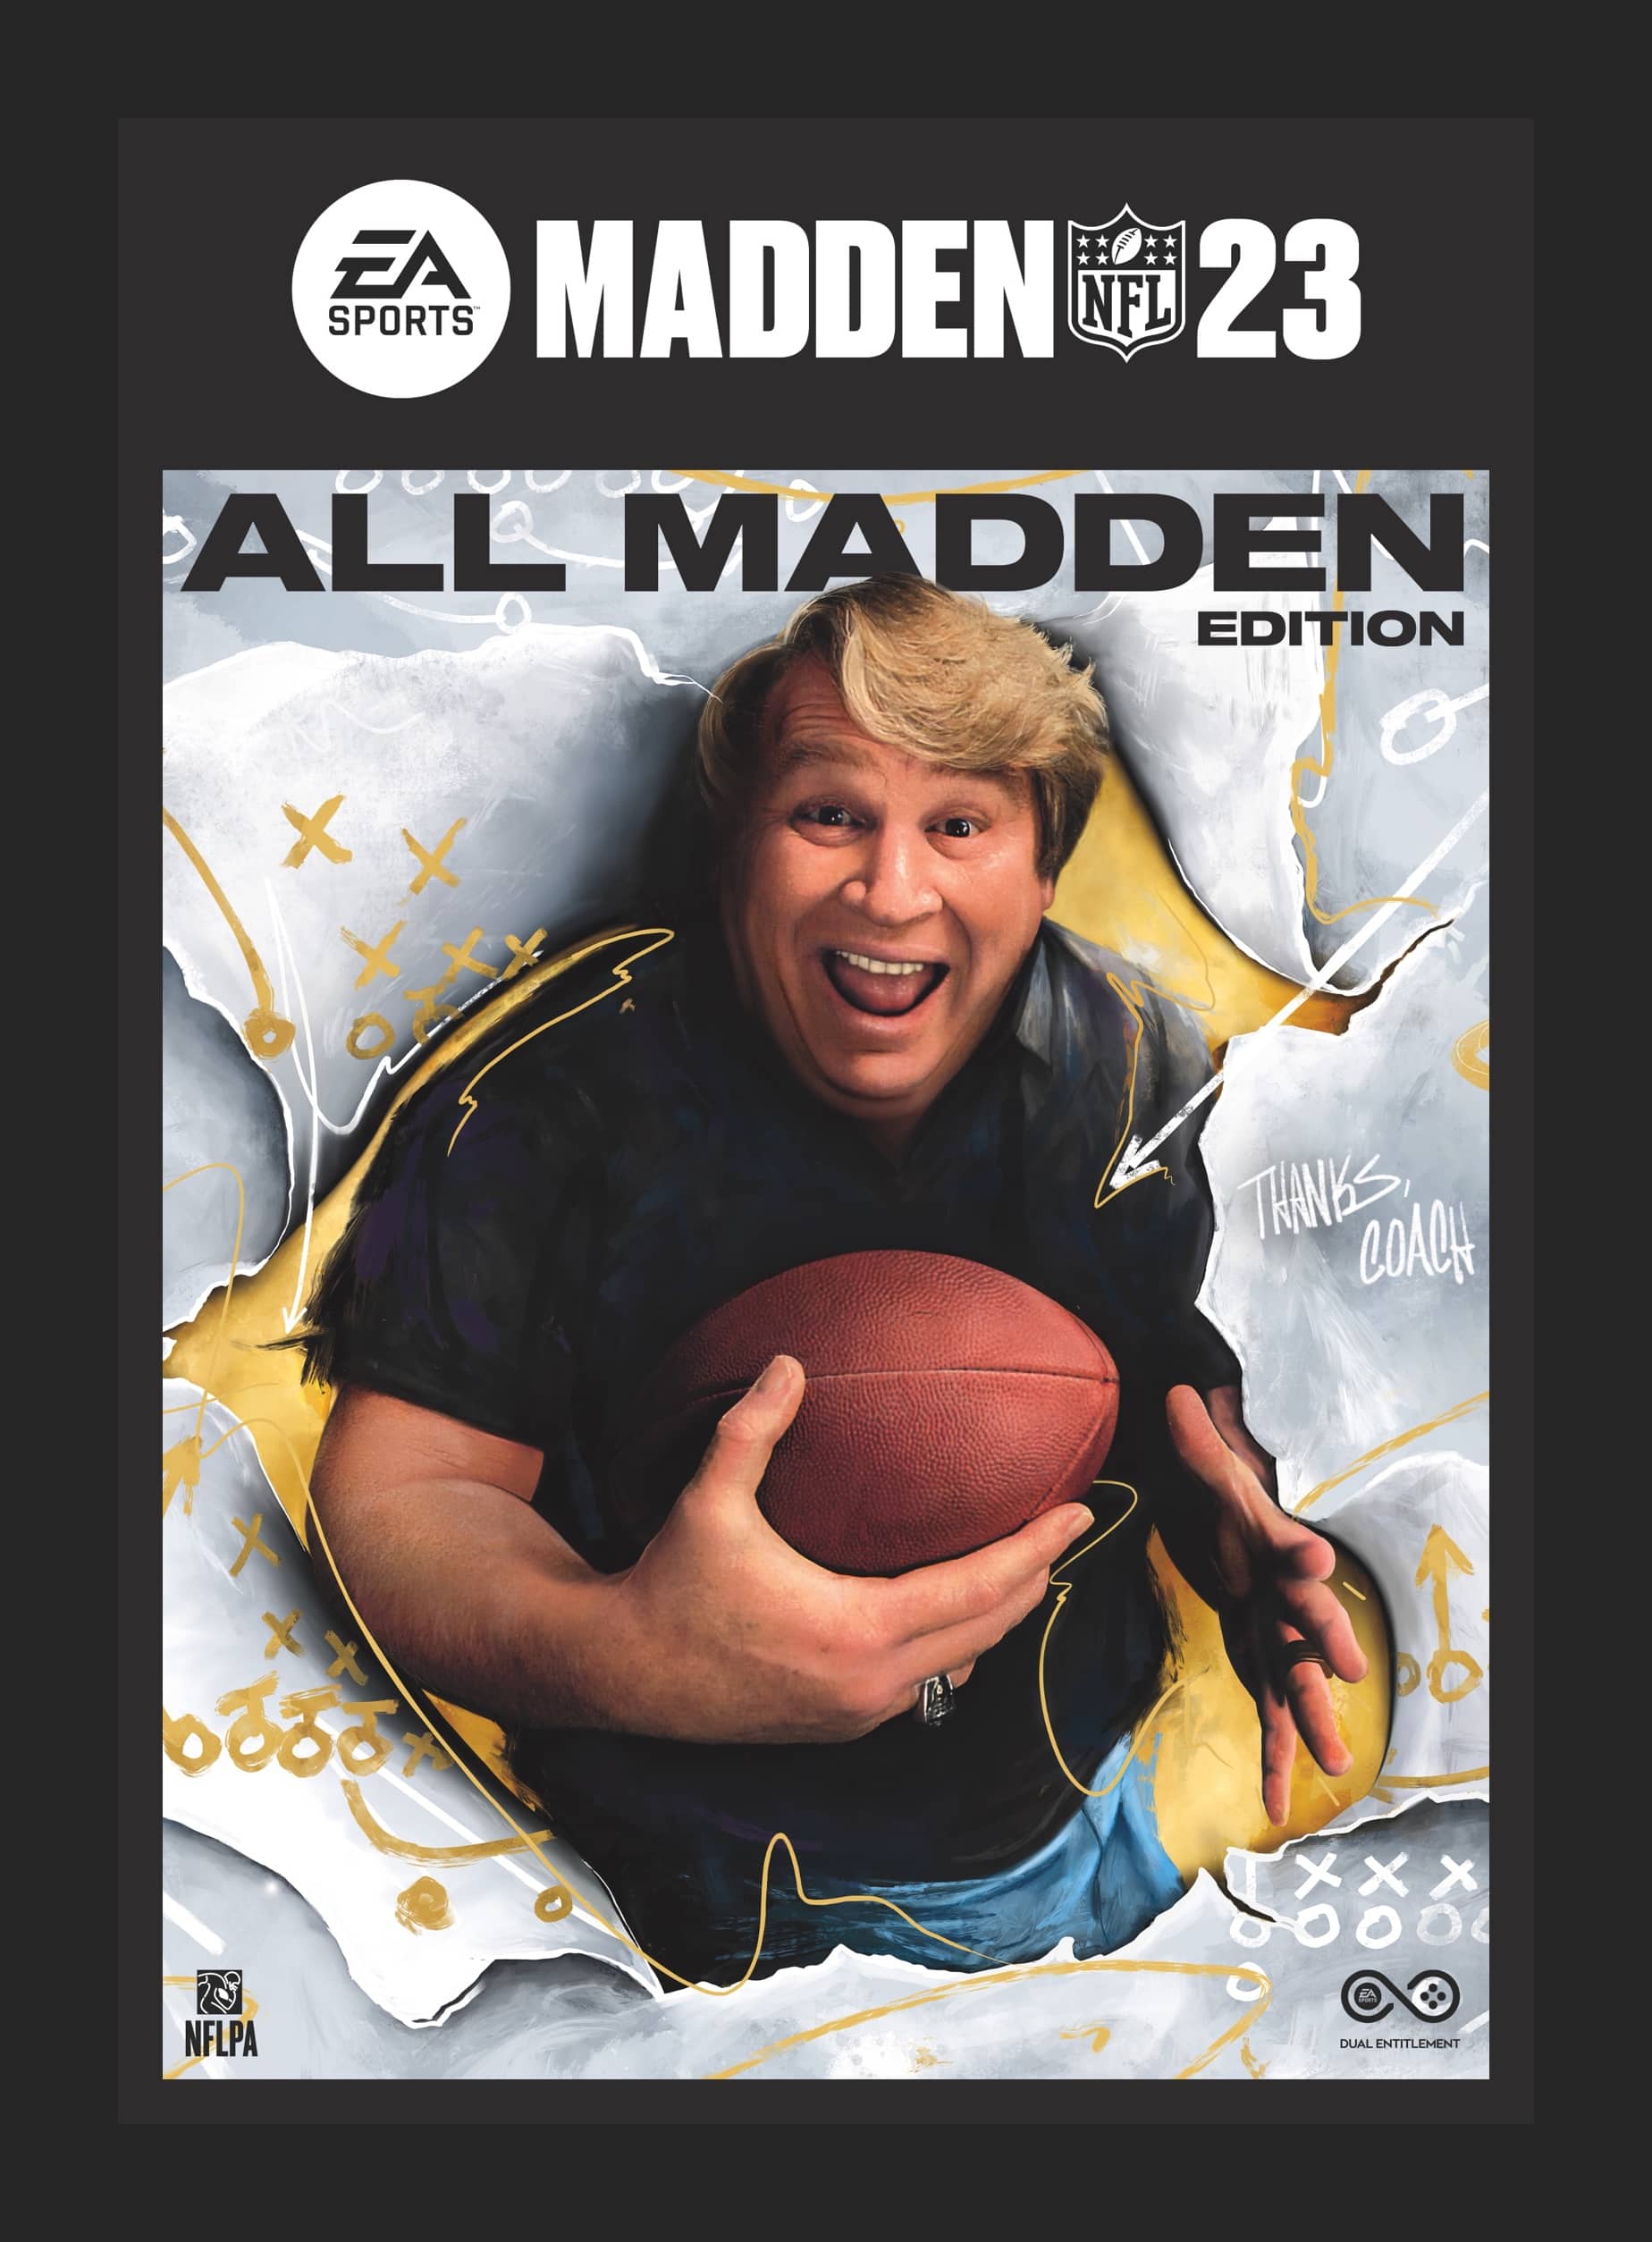 madden23 release